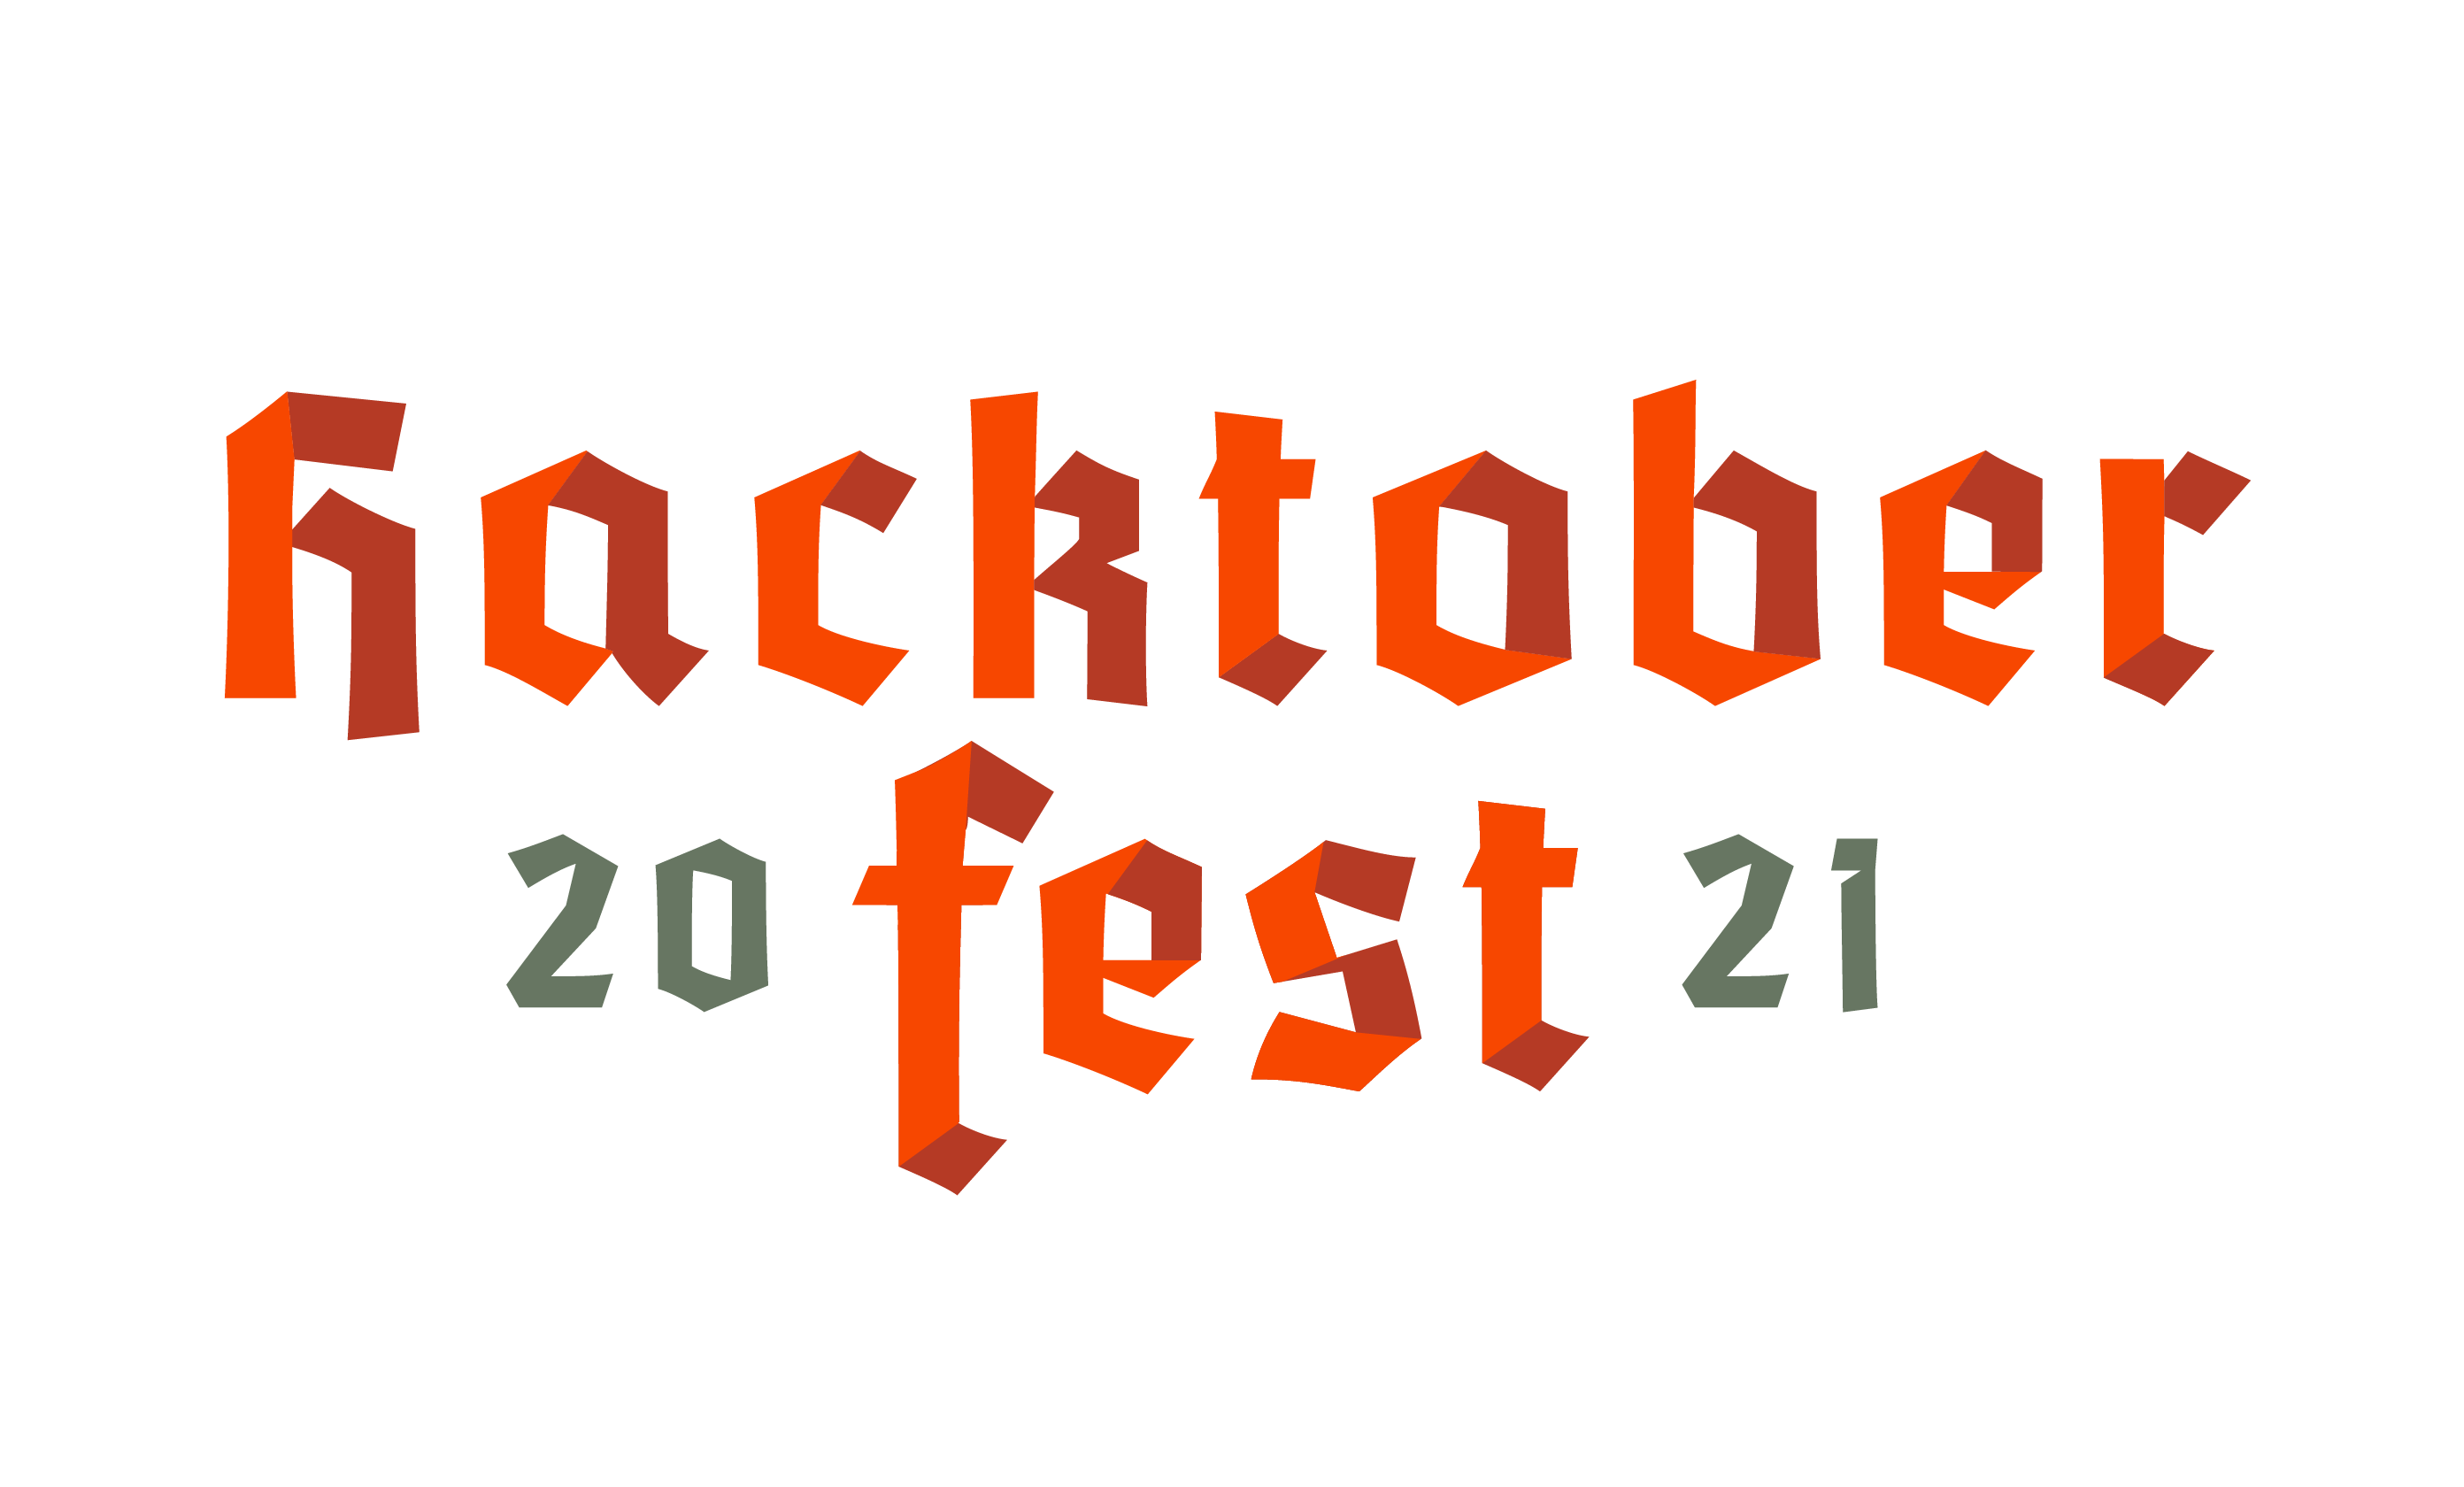 Hacktoberfest 2021Logo